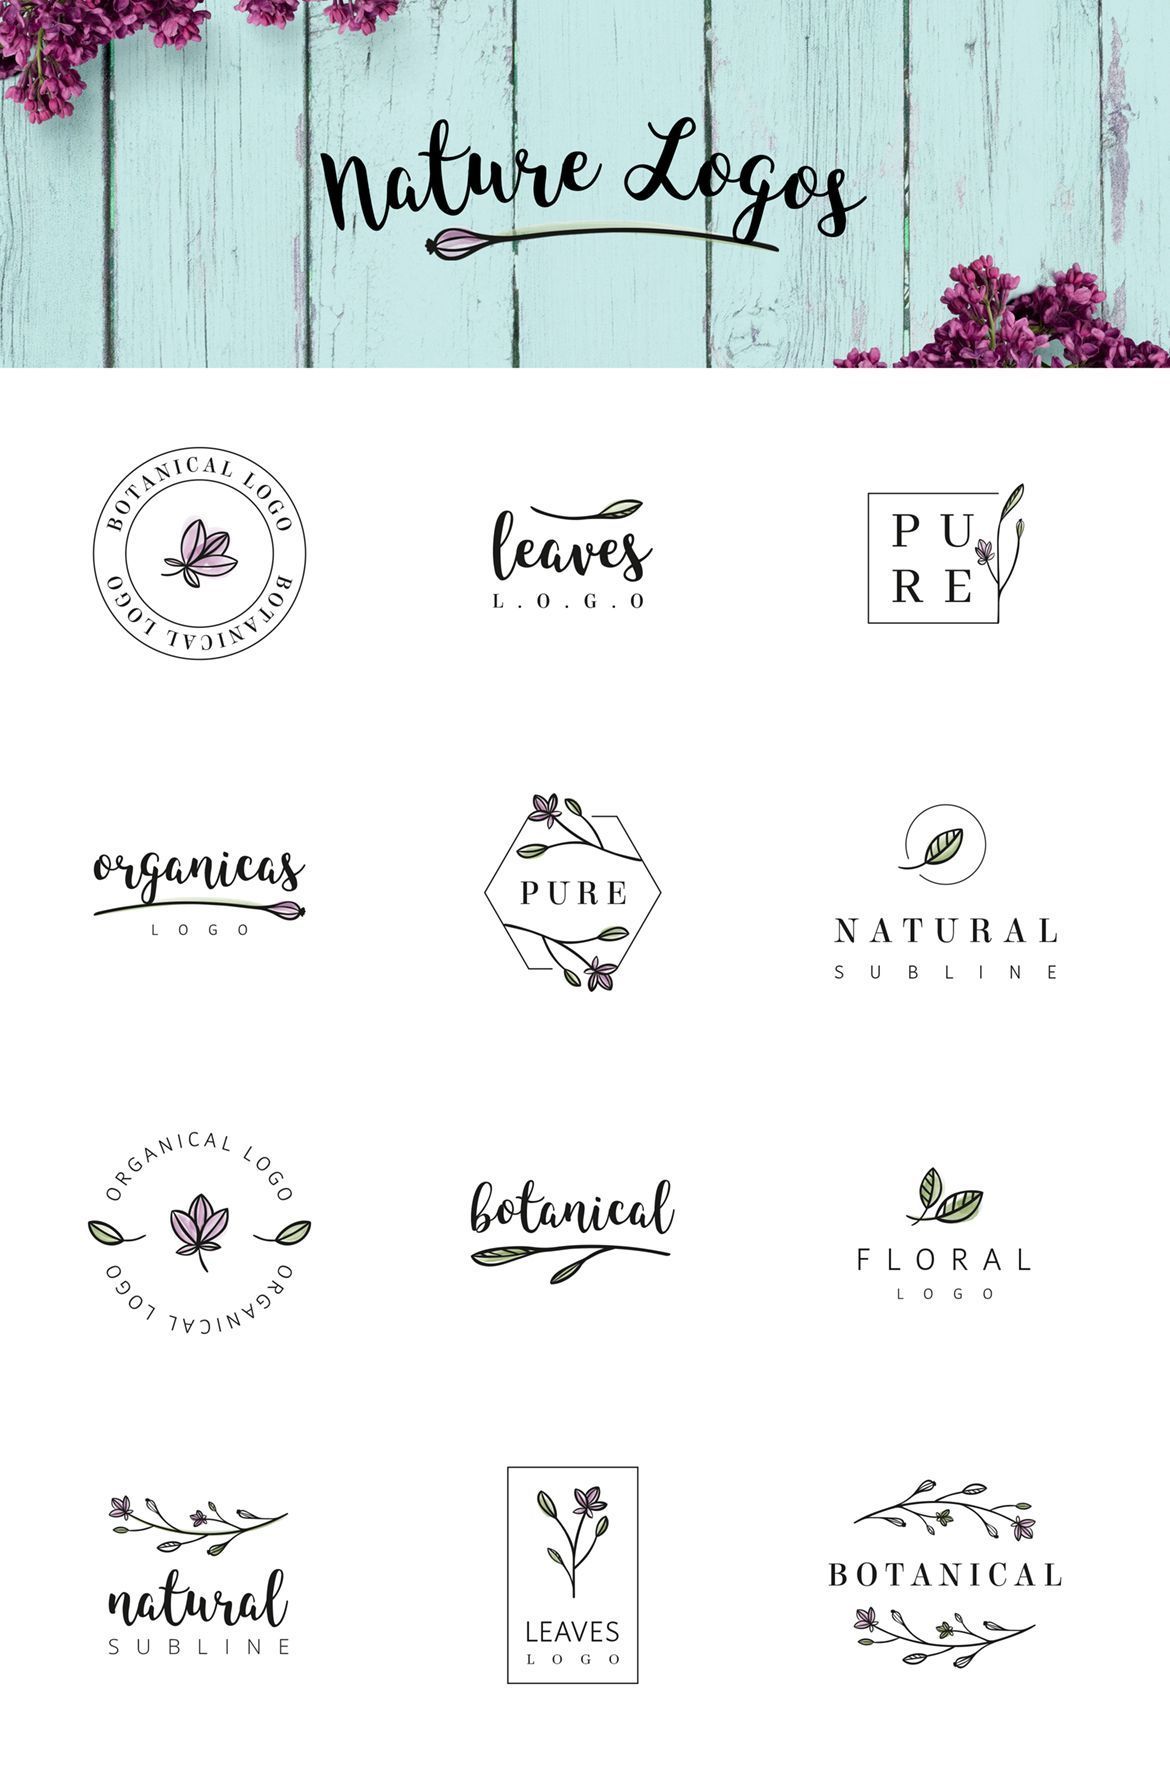 Nature & floral logos + BONUS -   8 planting Logo inspiration
 ideas